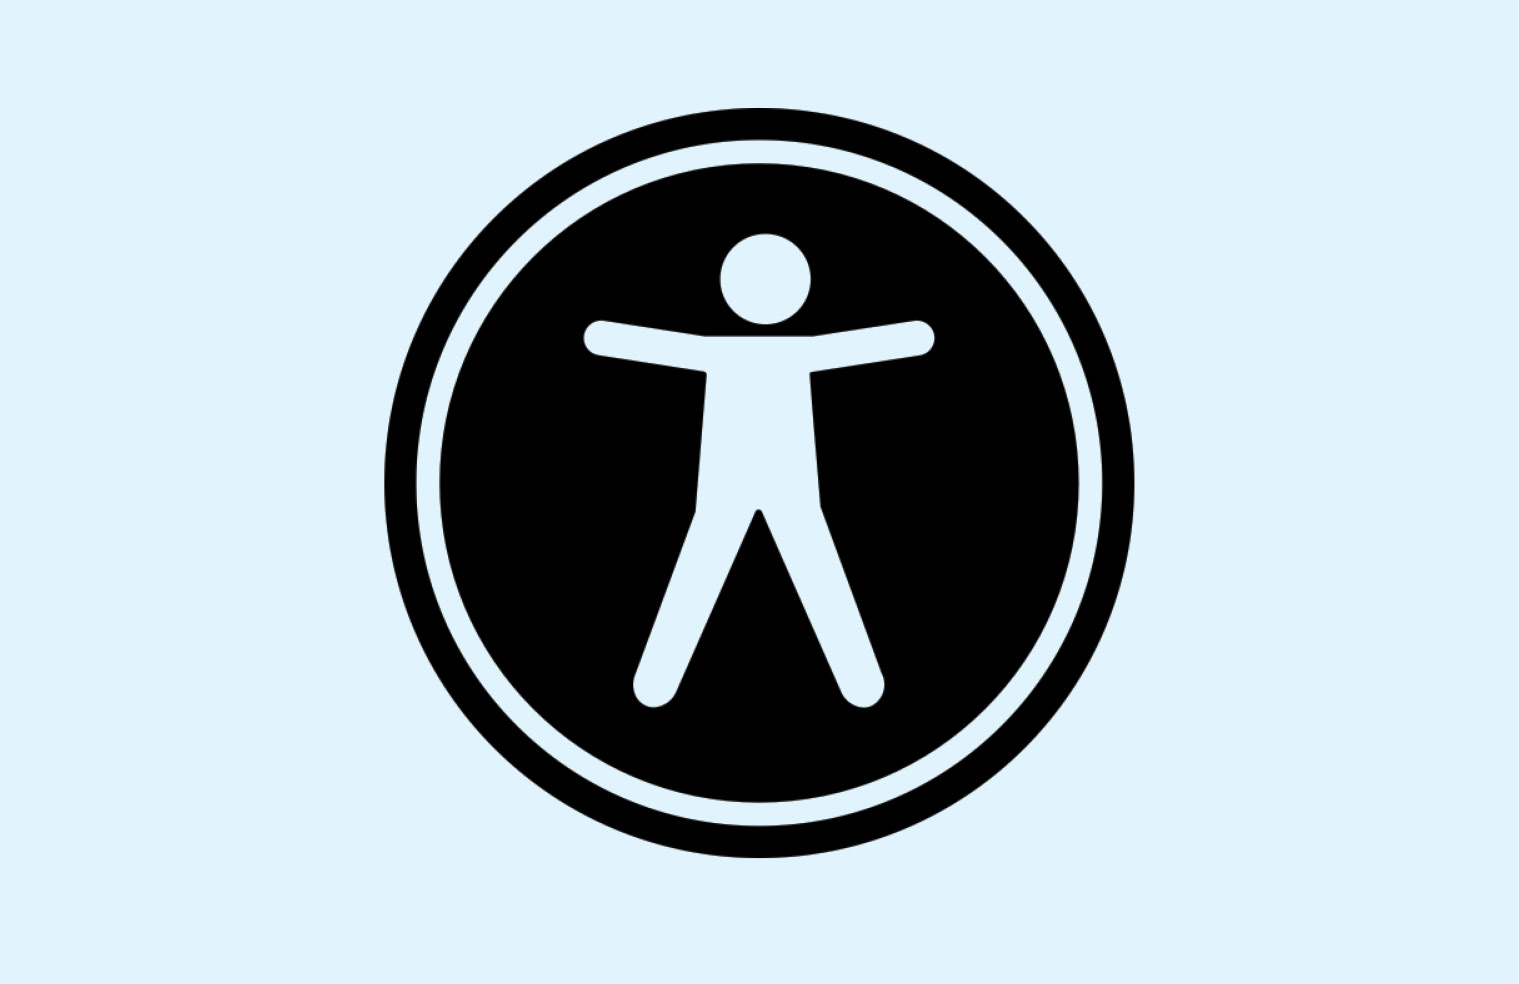 Digital accessibility icon